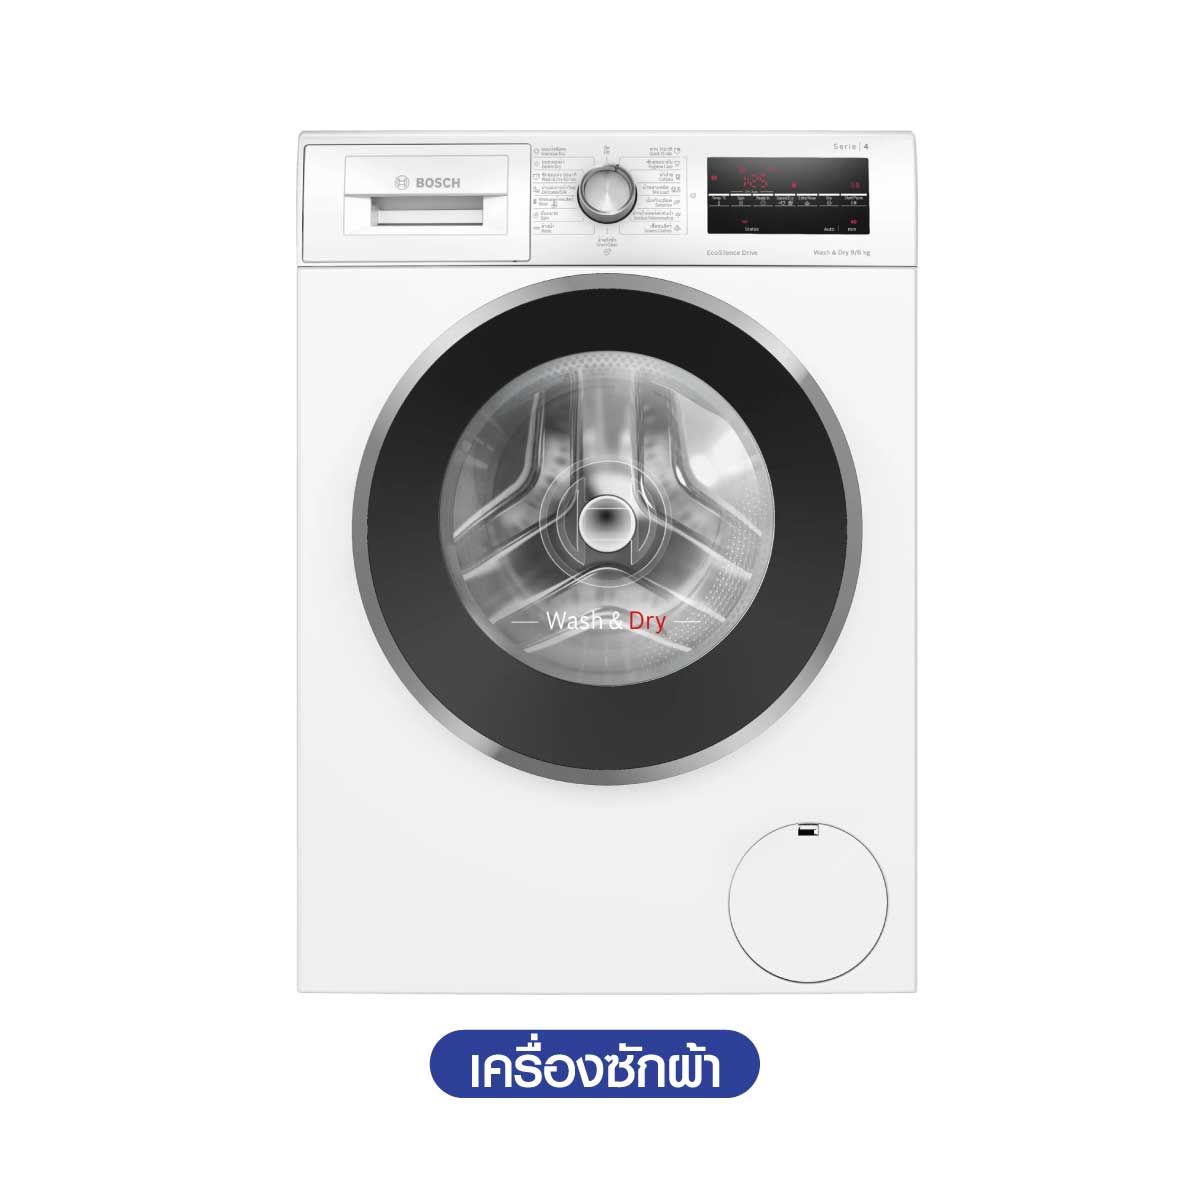 BOSCH เครื่องซักผ้า/อบผ้า 9/6kg สีขาว Series 4 รุ่น WNA14400TH